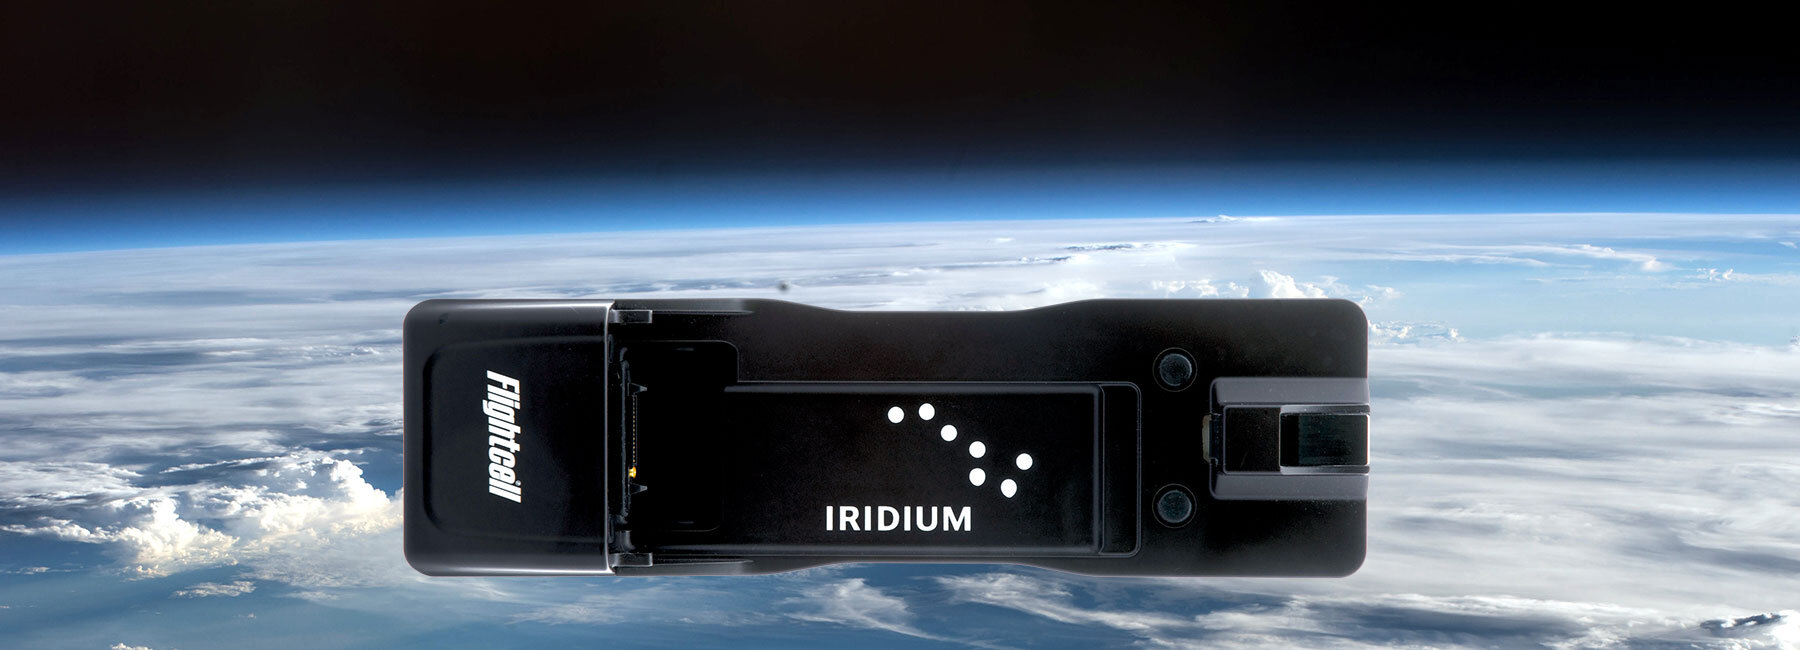 Teléfono para avión - Iridium series - Flightcell International - sin cable  / satélite